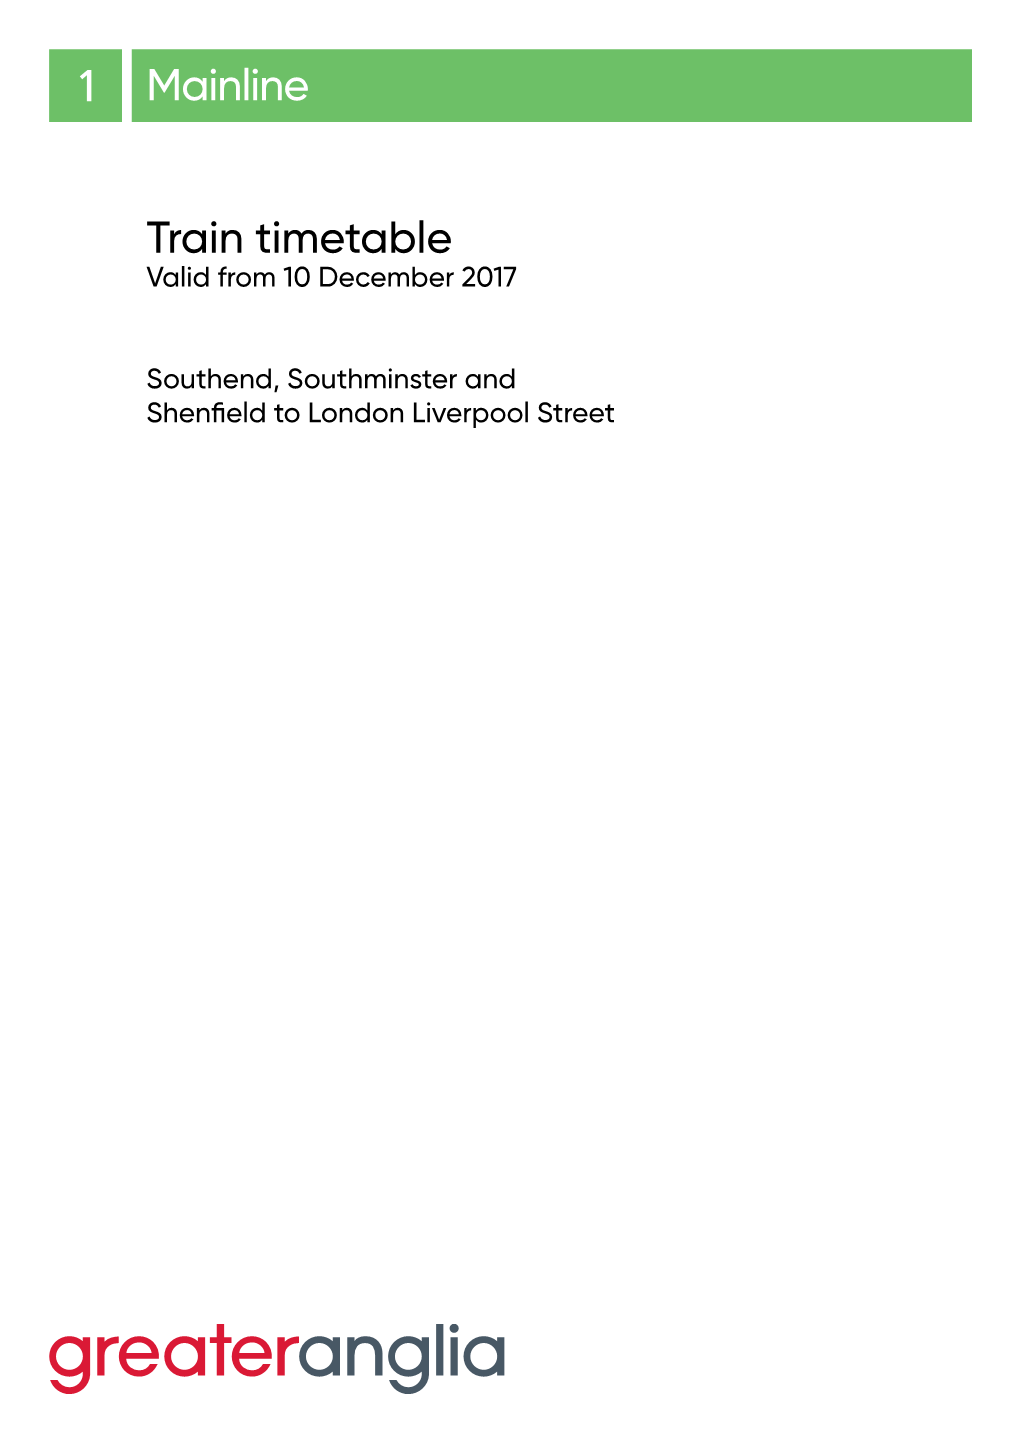 Train Timetable Mainline